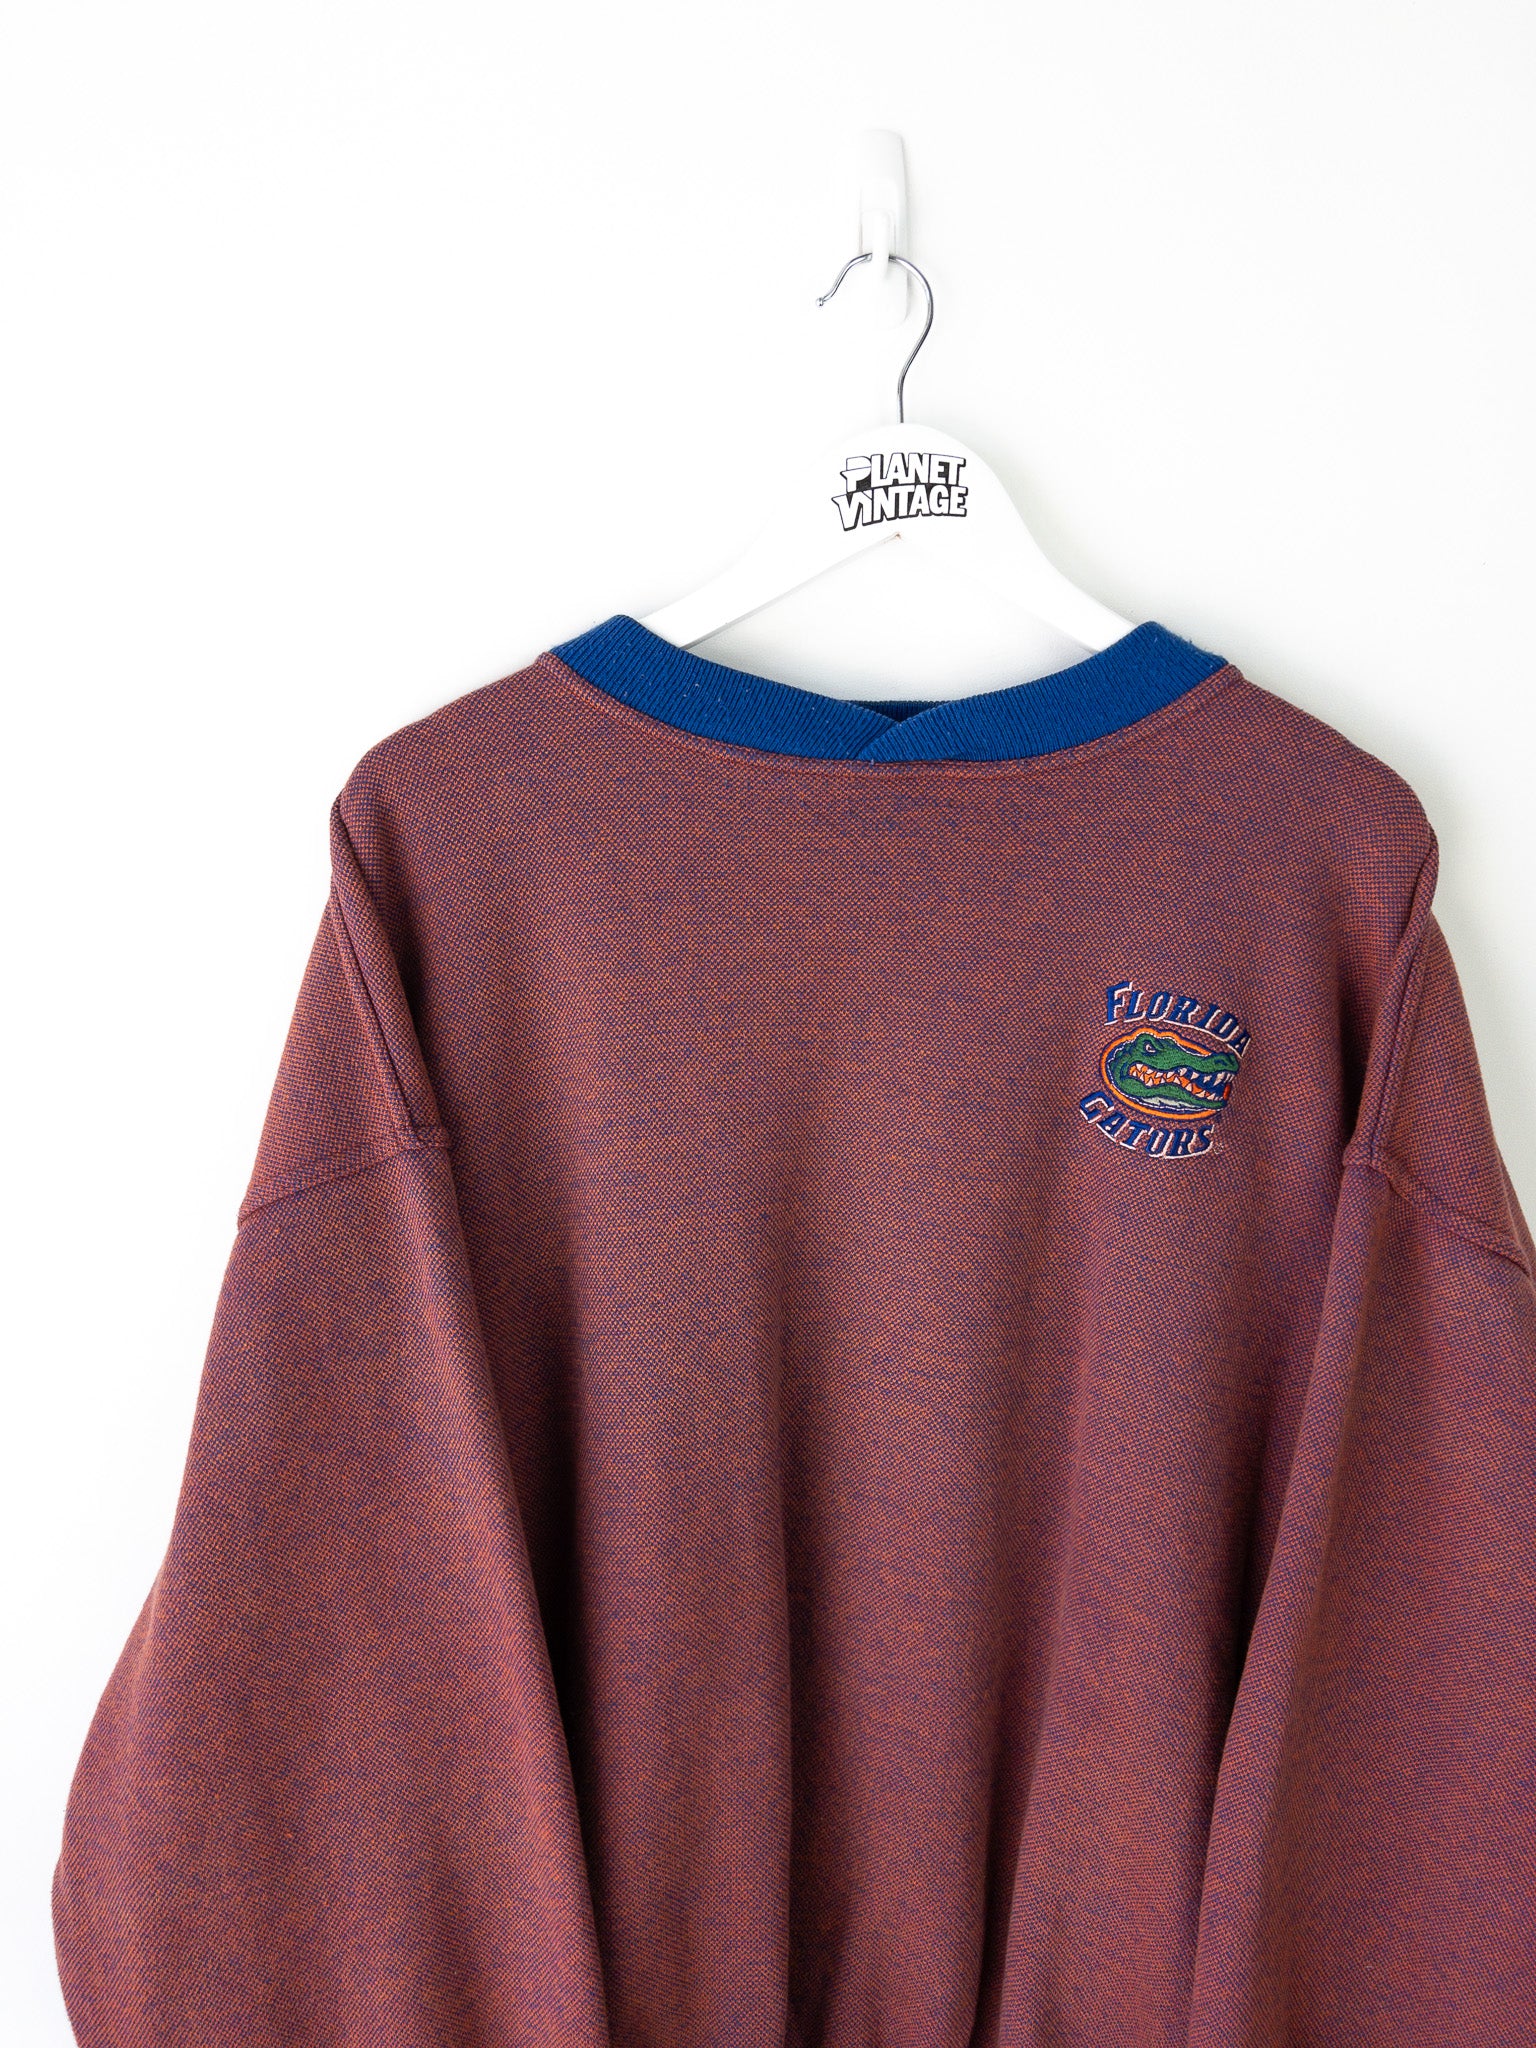 Vintage Florida Gators Sweatshirt (XXL)